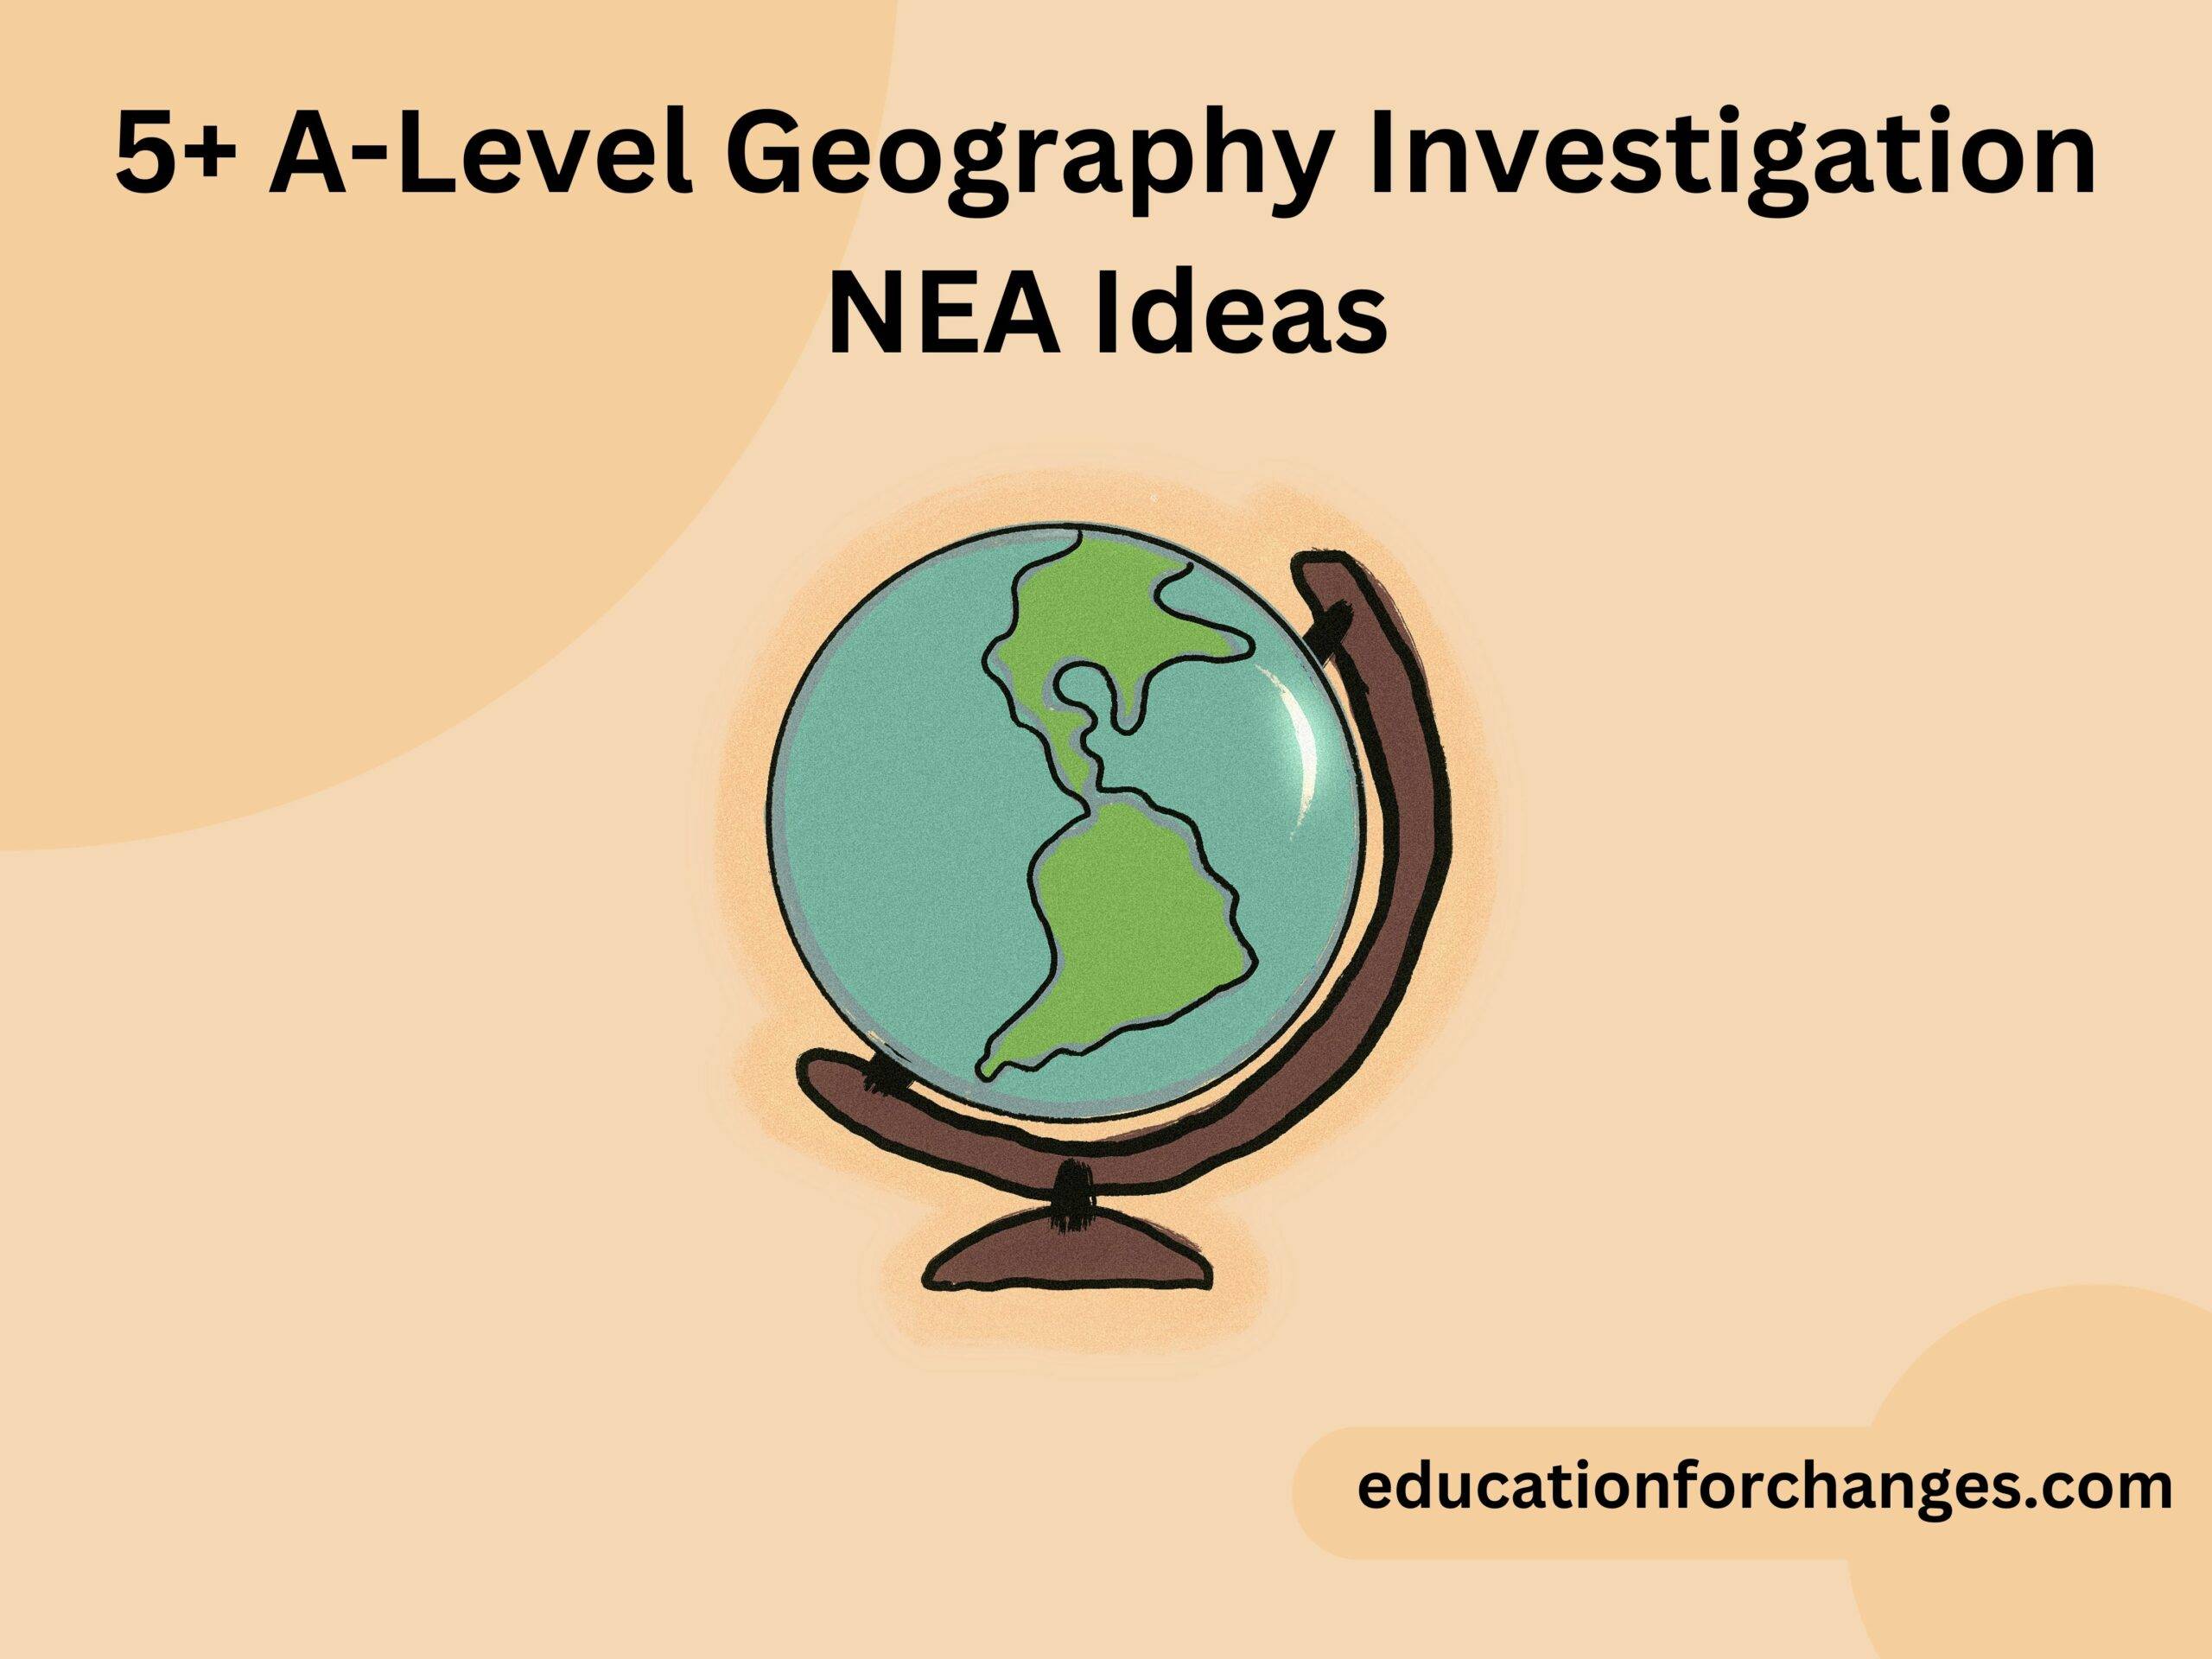 5+ A-Level Geography Investigation NEA Ideas